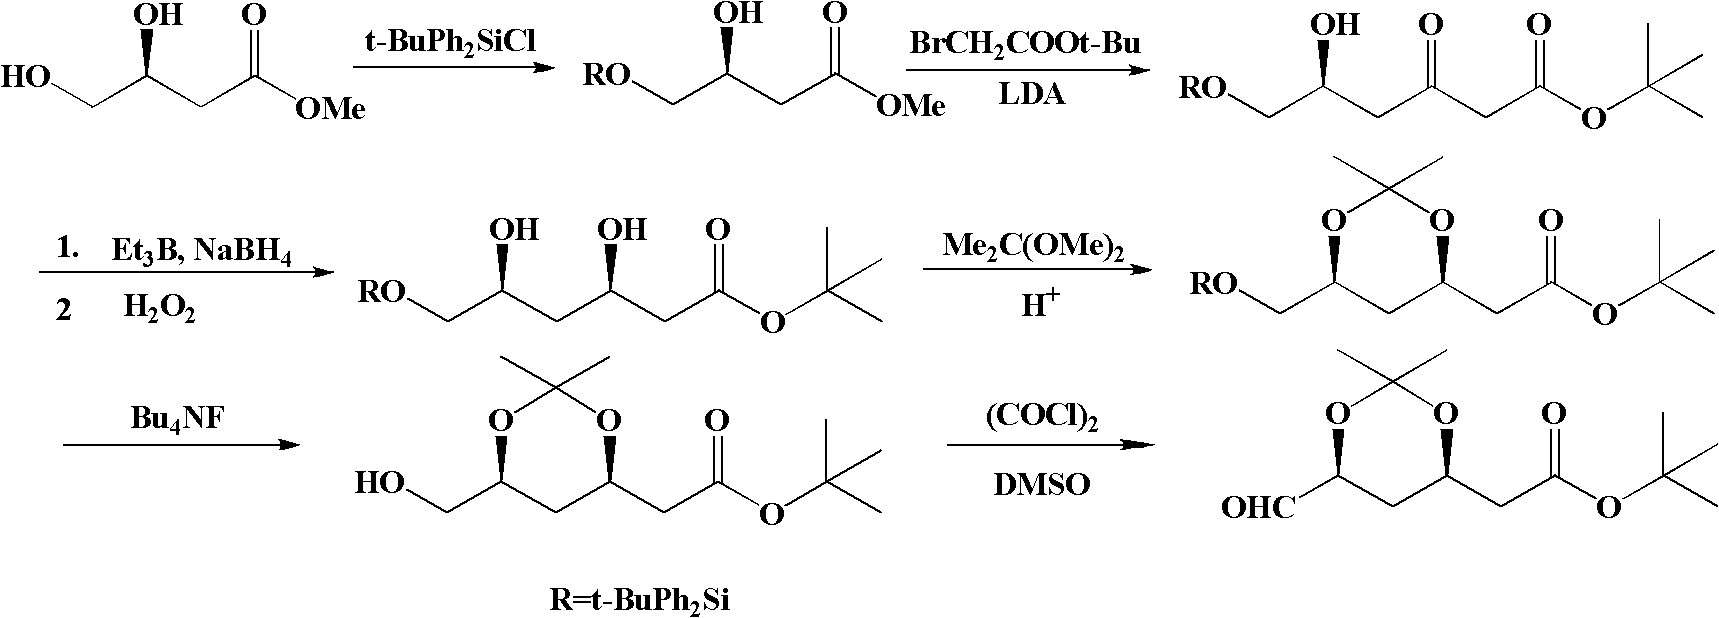 Method for preparing (4R-cis)-6-substituted-2,2-dimethyl-1,3-dioxane-4-tert-butyl acetate